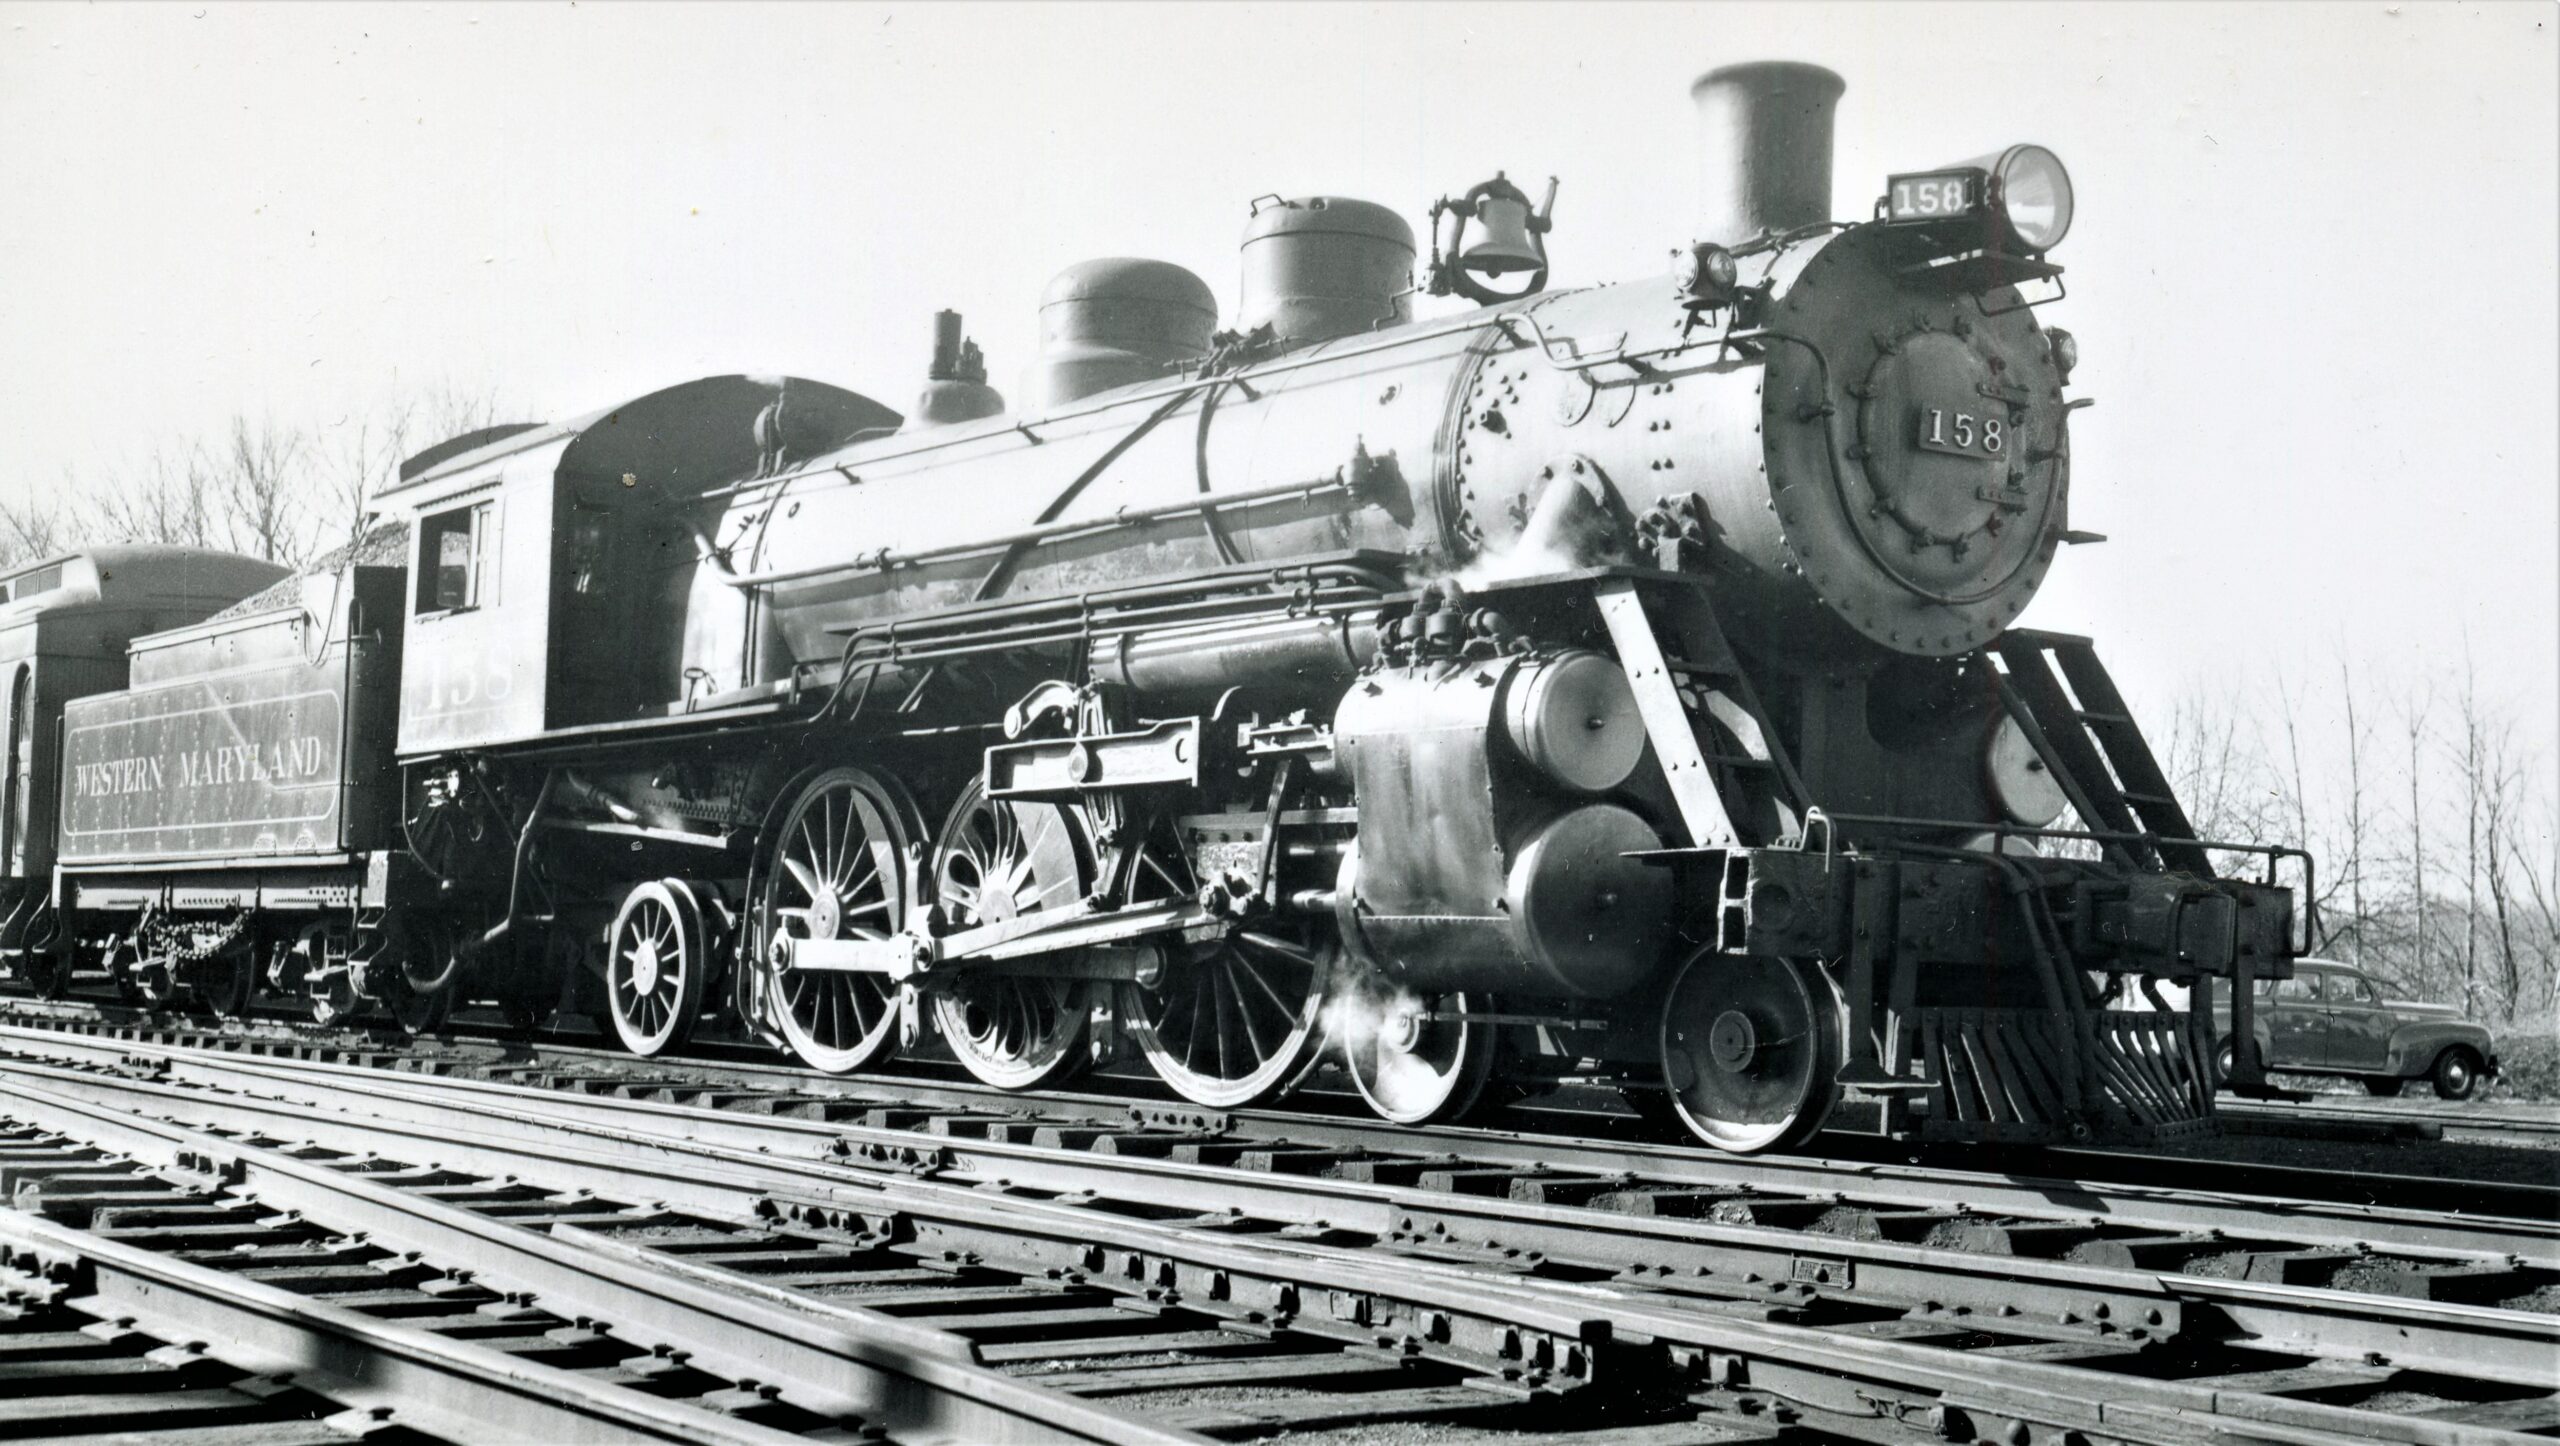 Western Maryland Railway | Union Bridge, Maryland | K1 class #158 steam locomotive | Passenger Train | May 22, 1941